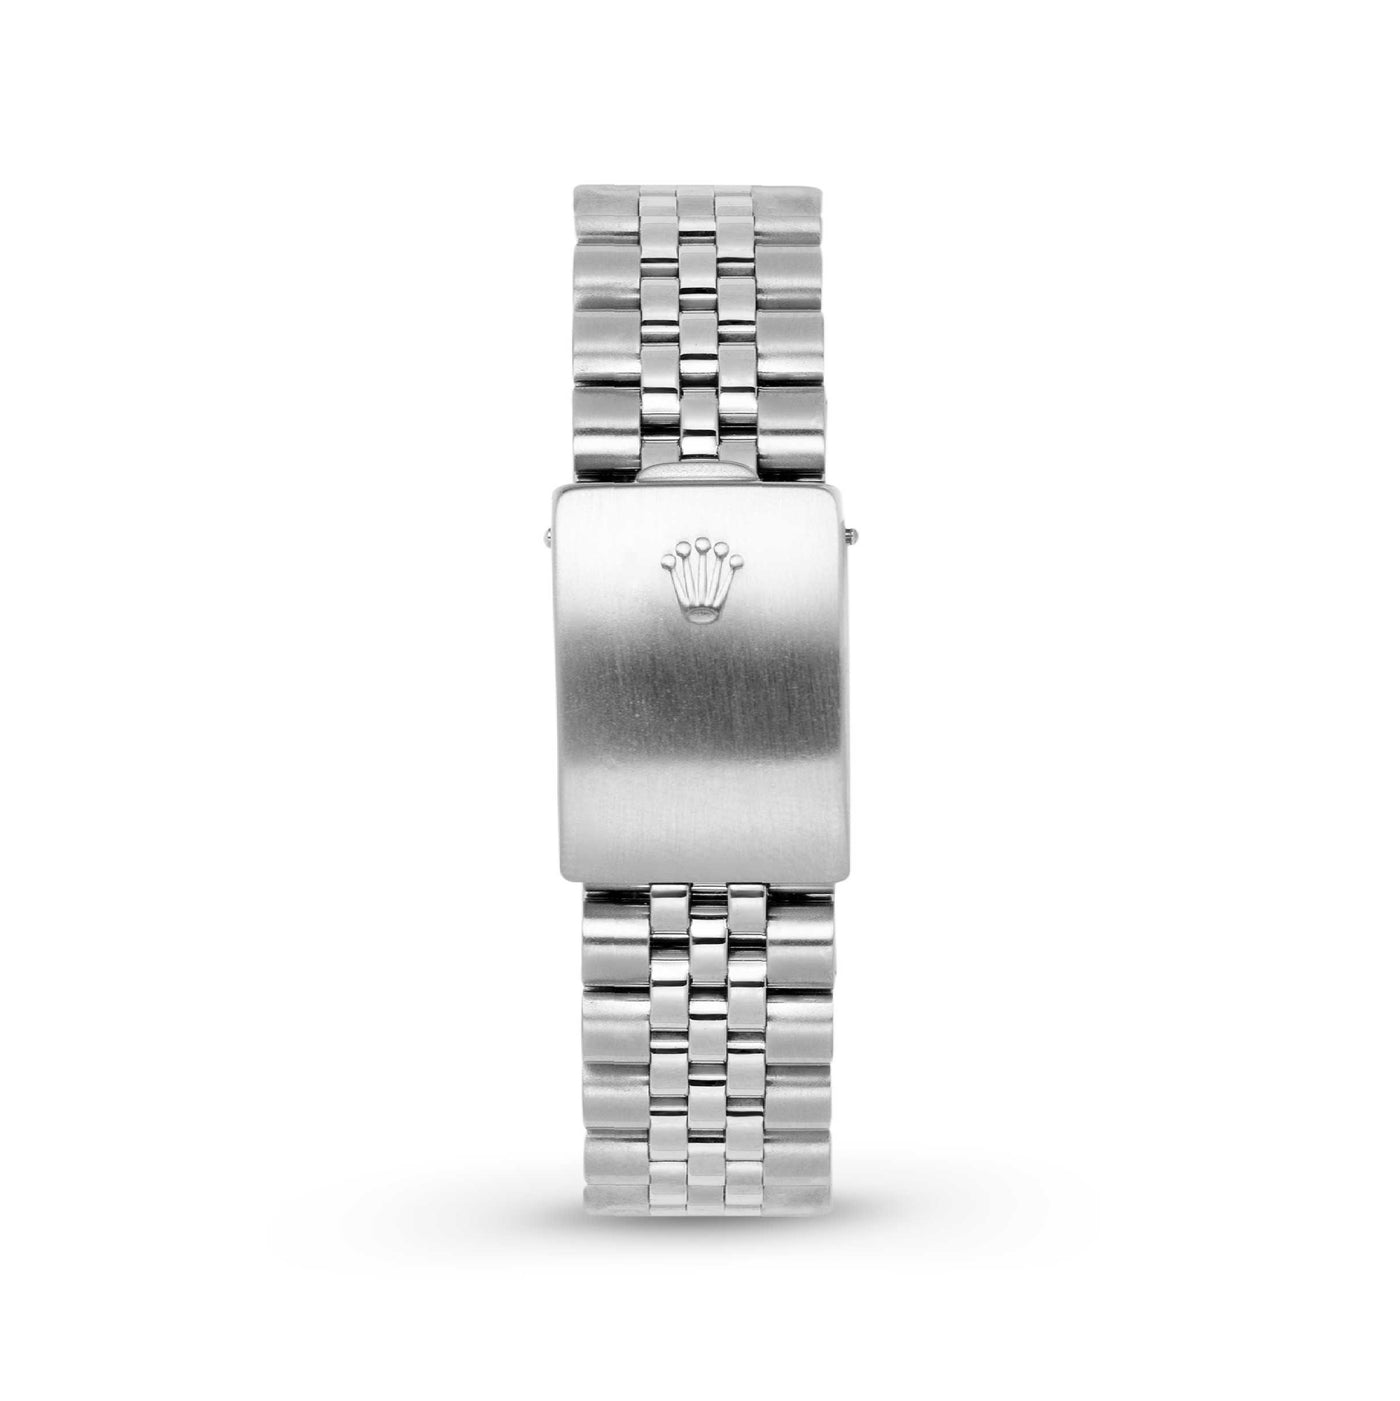 Rolex Datejust Diamond Bezel Watch 36mm Champagne Roman Dial | 1.25ct